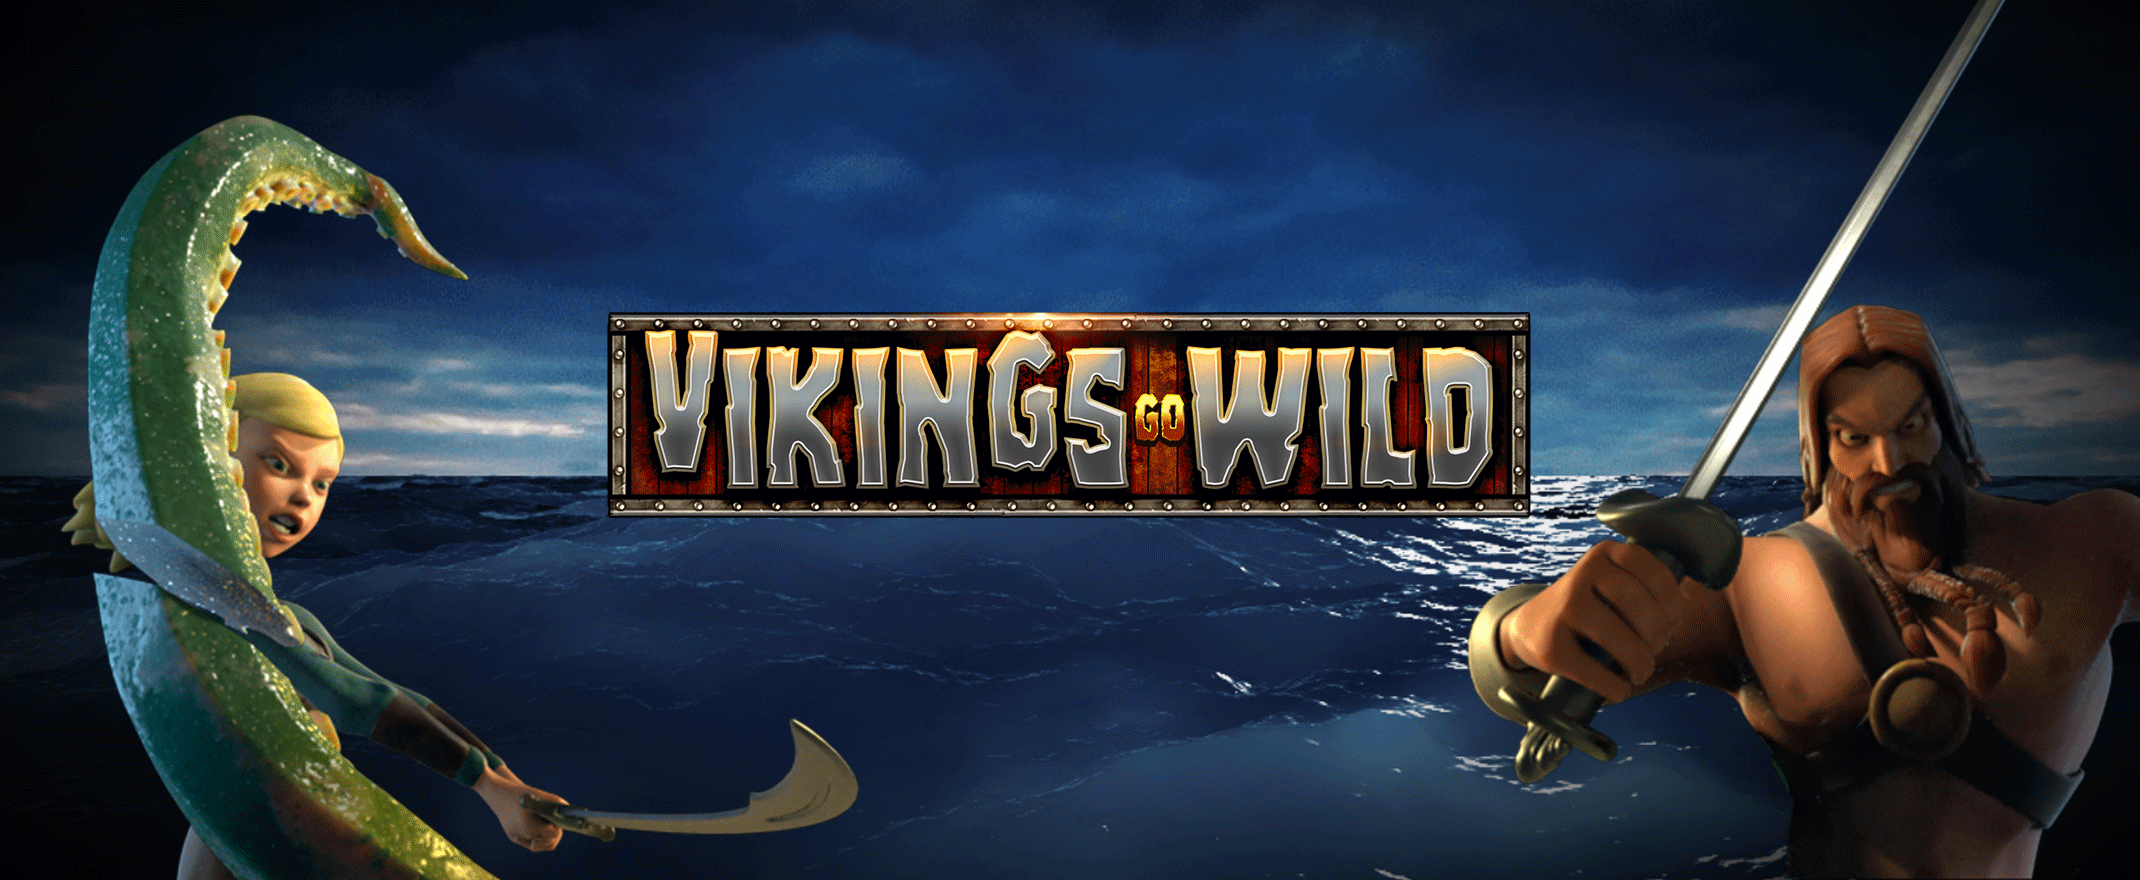 Vikings Go Wold - Yggdrasil